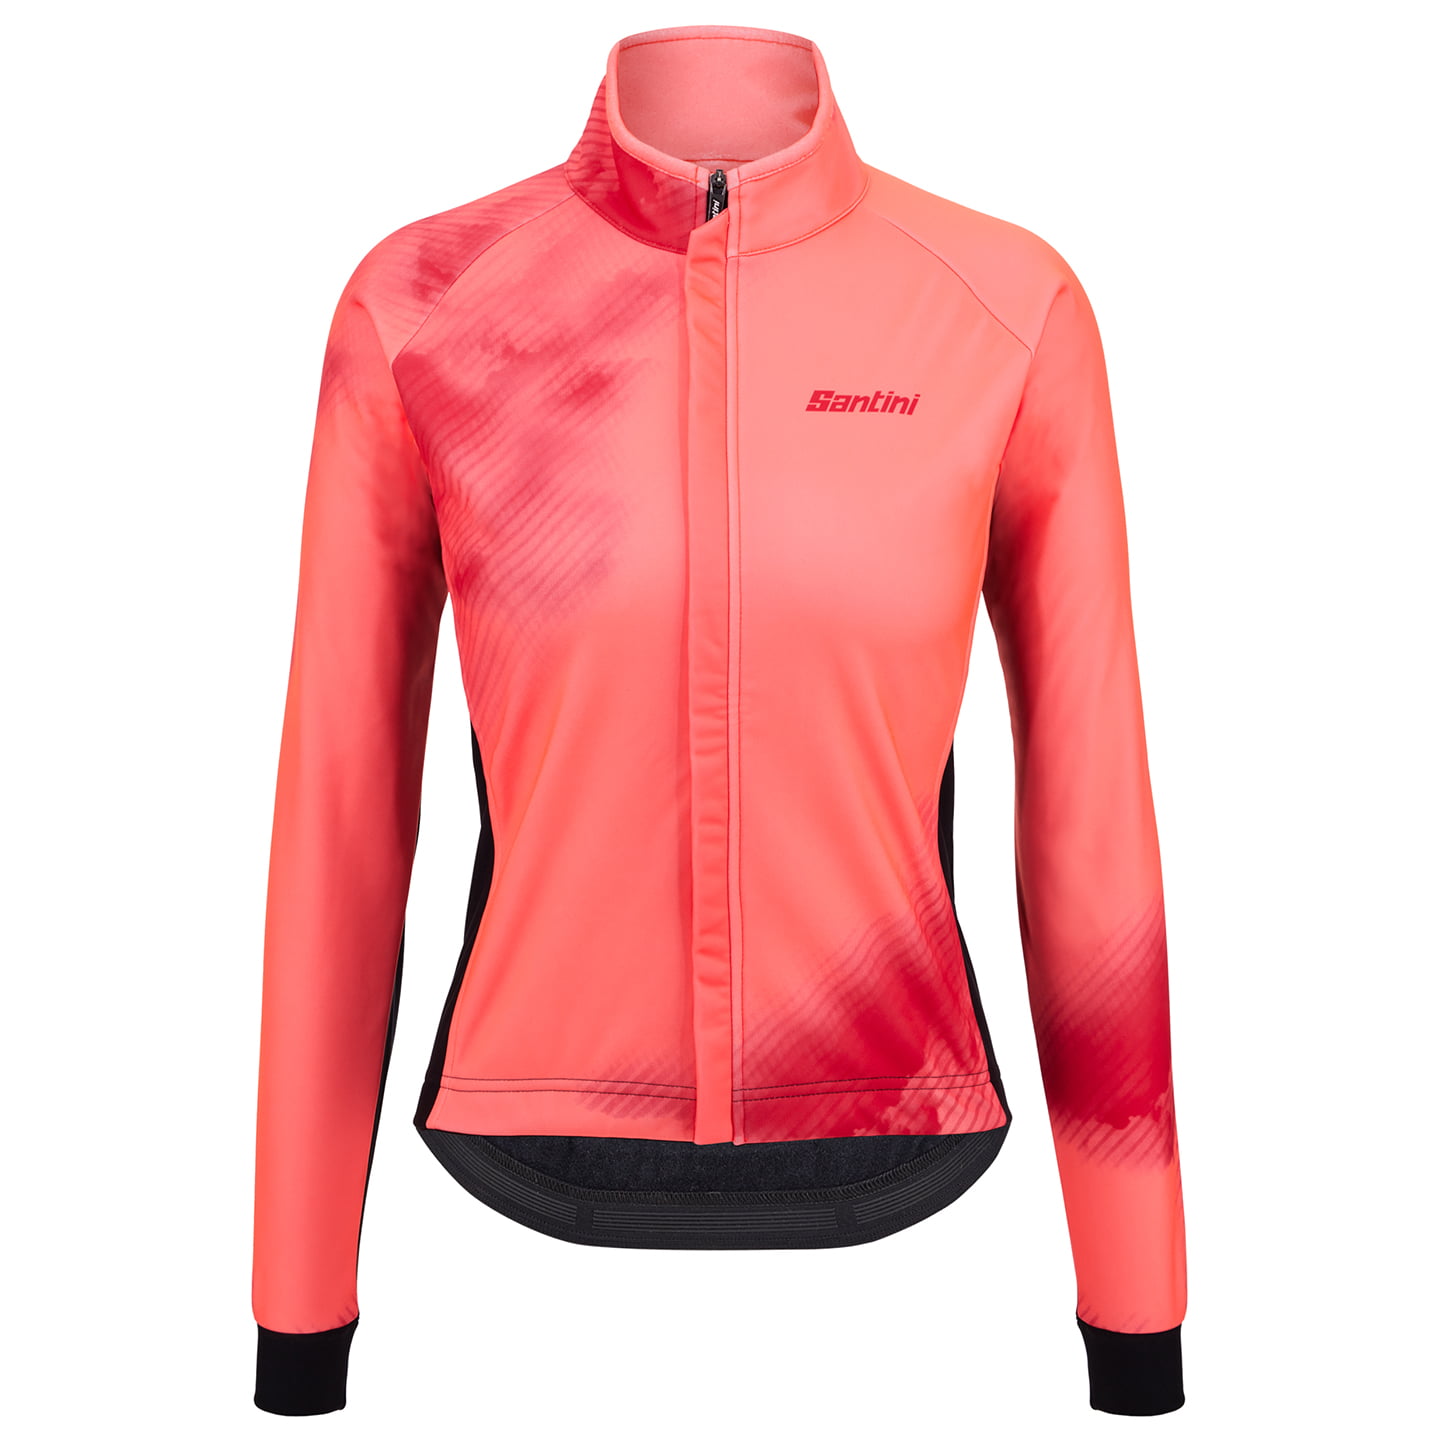 SANTINI Pure Dye winter jacket women Women’s Thermal Jacket, size M, Cycle jacket, Cycling clothing